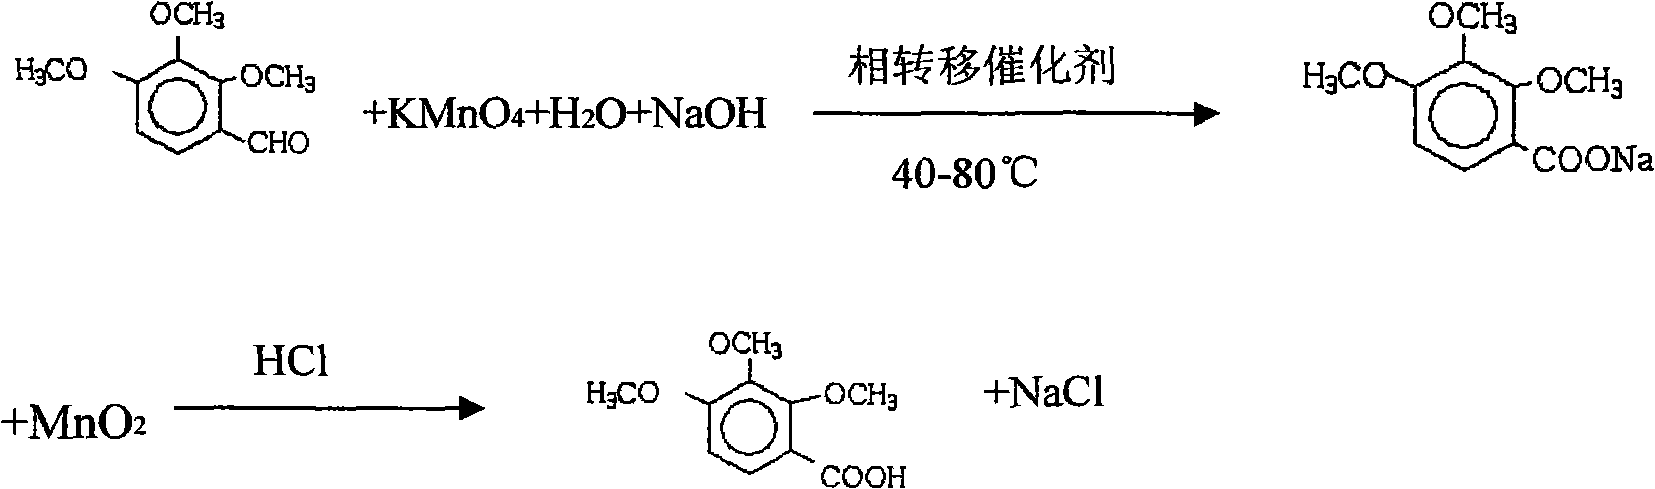 Method for preparing 2,3,4-trimethoxybenzoic acid